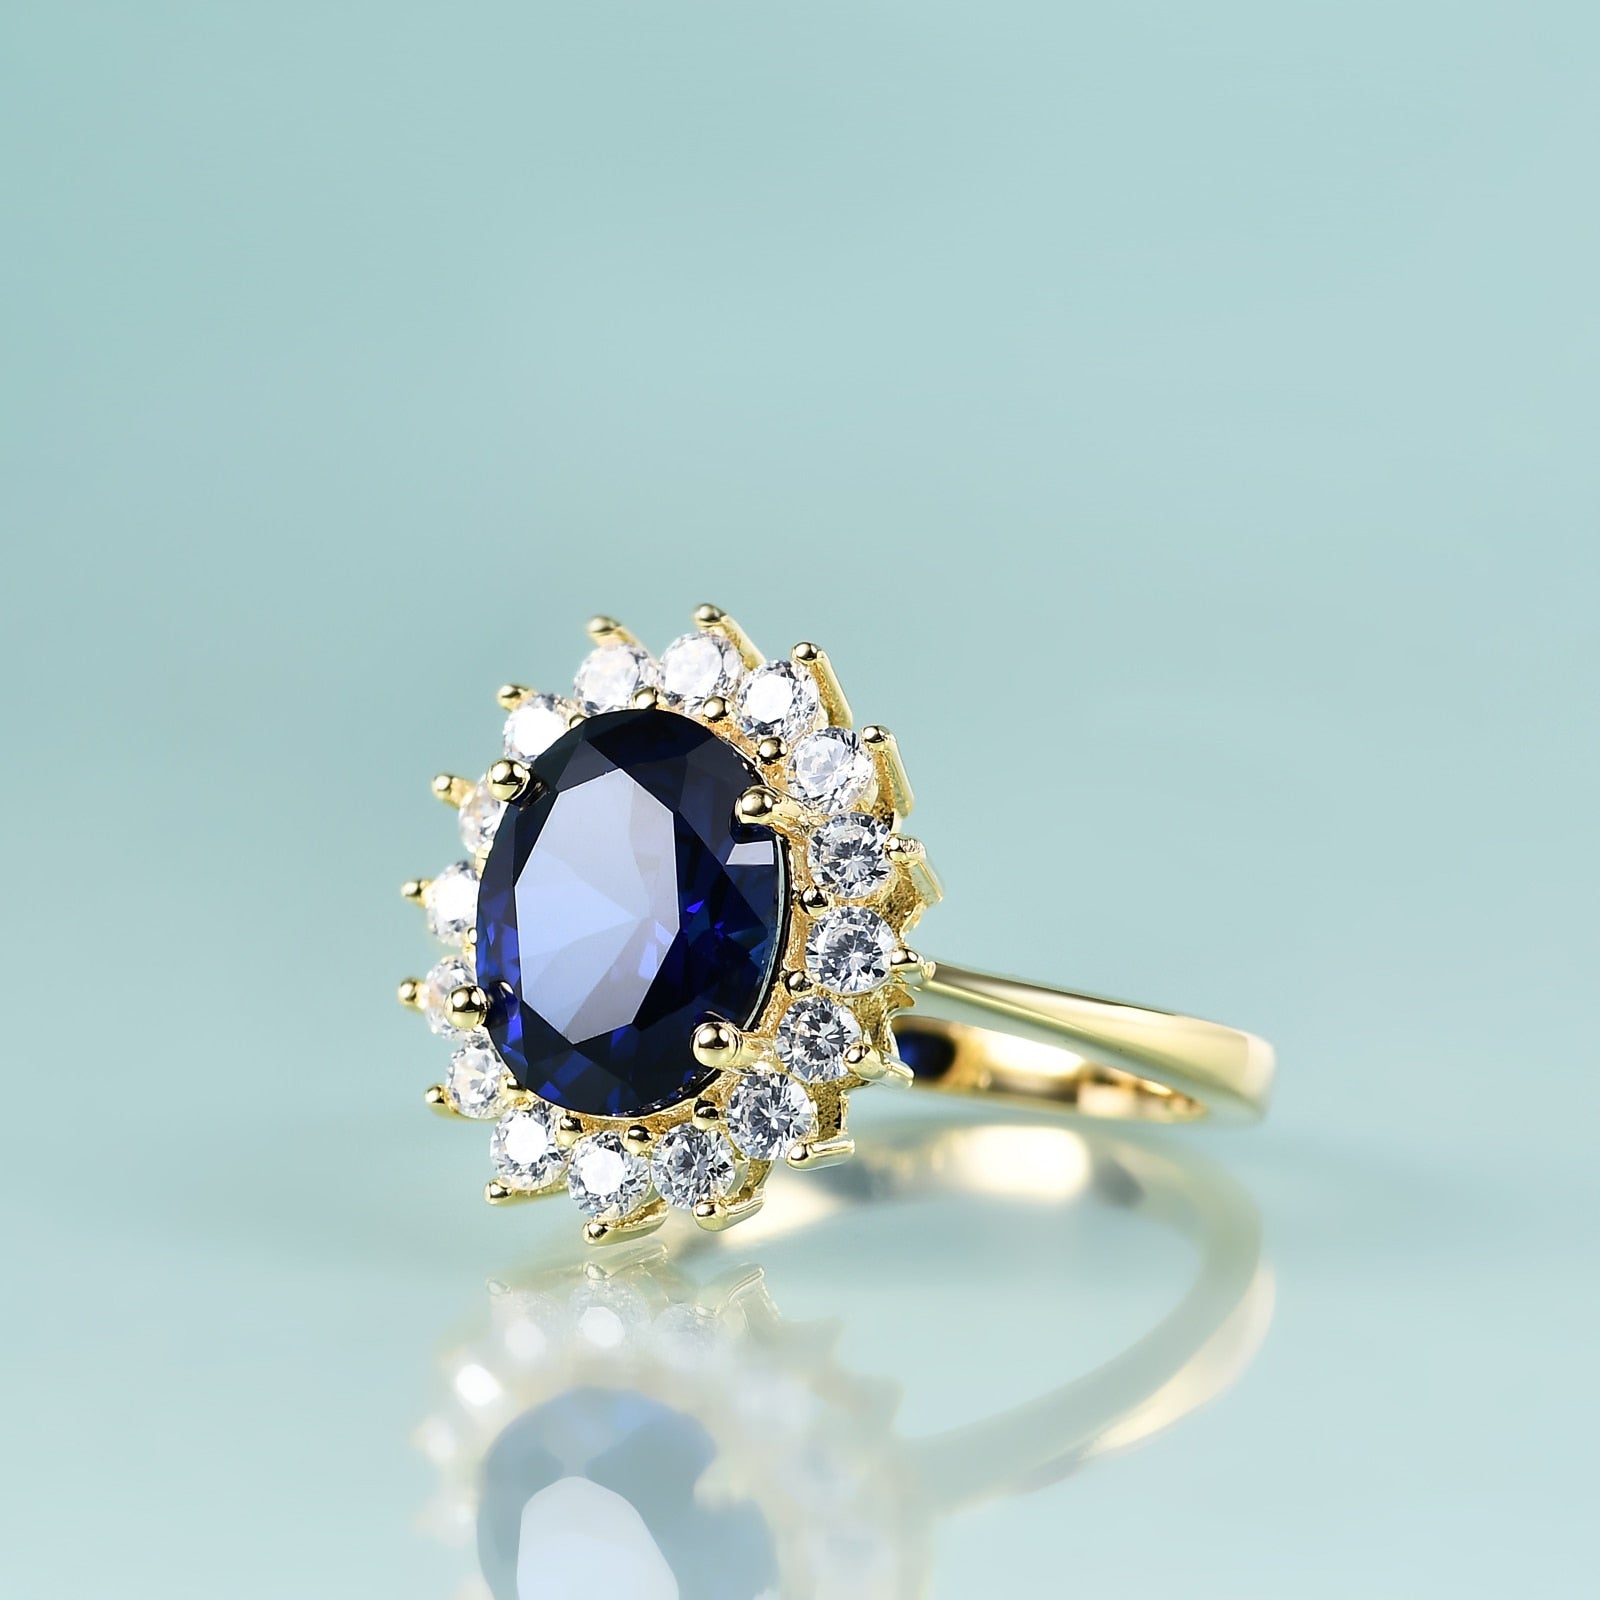 Princess Diana sapphire ring Princess Diana replica ring Rosery Poetry